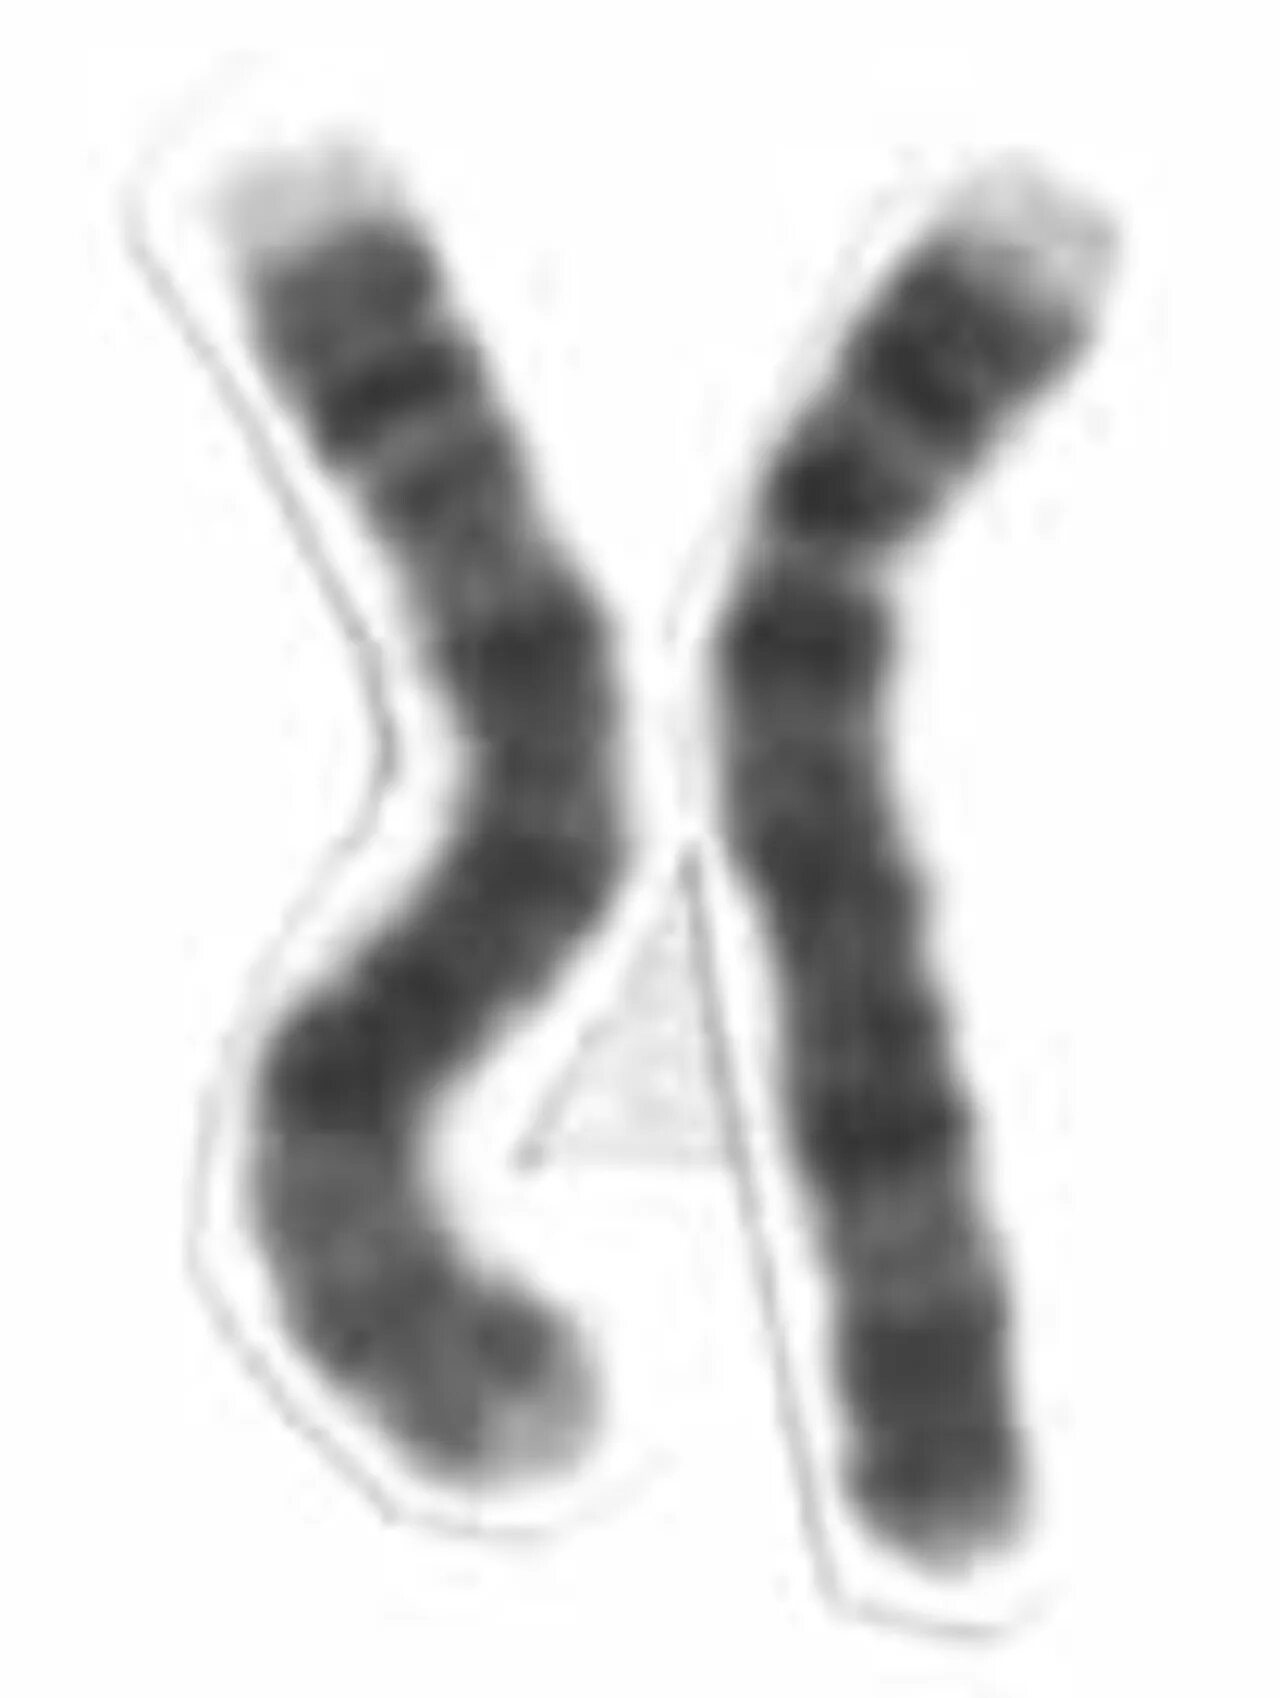 4 хромосома заболевание. 4 Хромосома. 12 Хромосома человека. 2-Я хромосома человека.